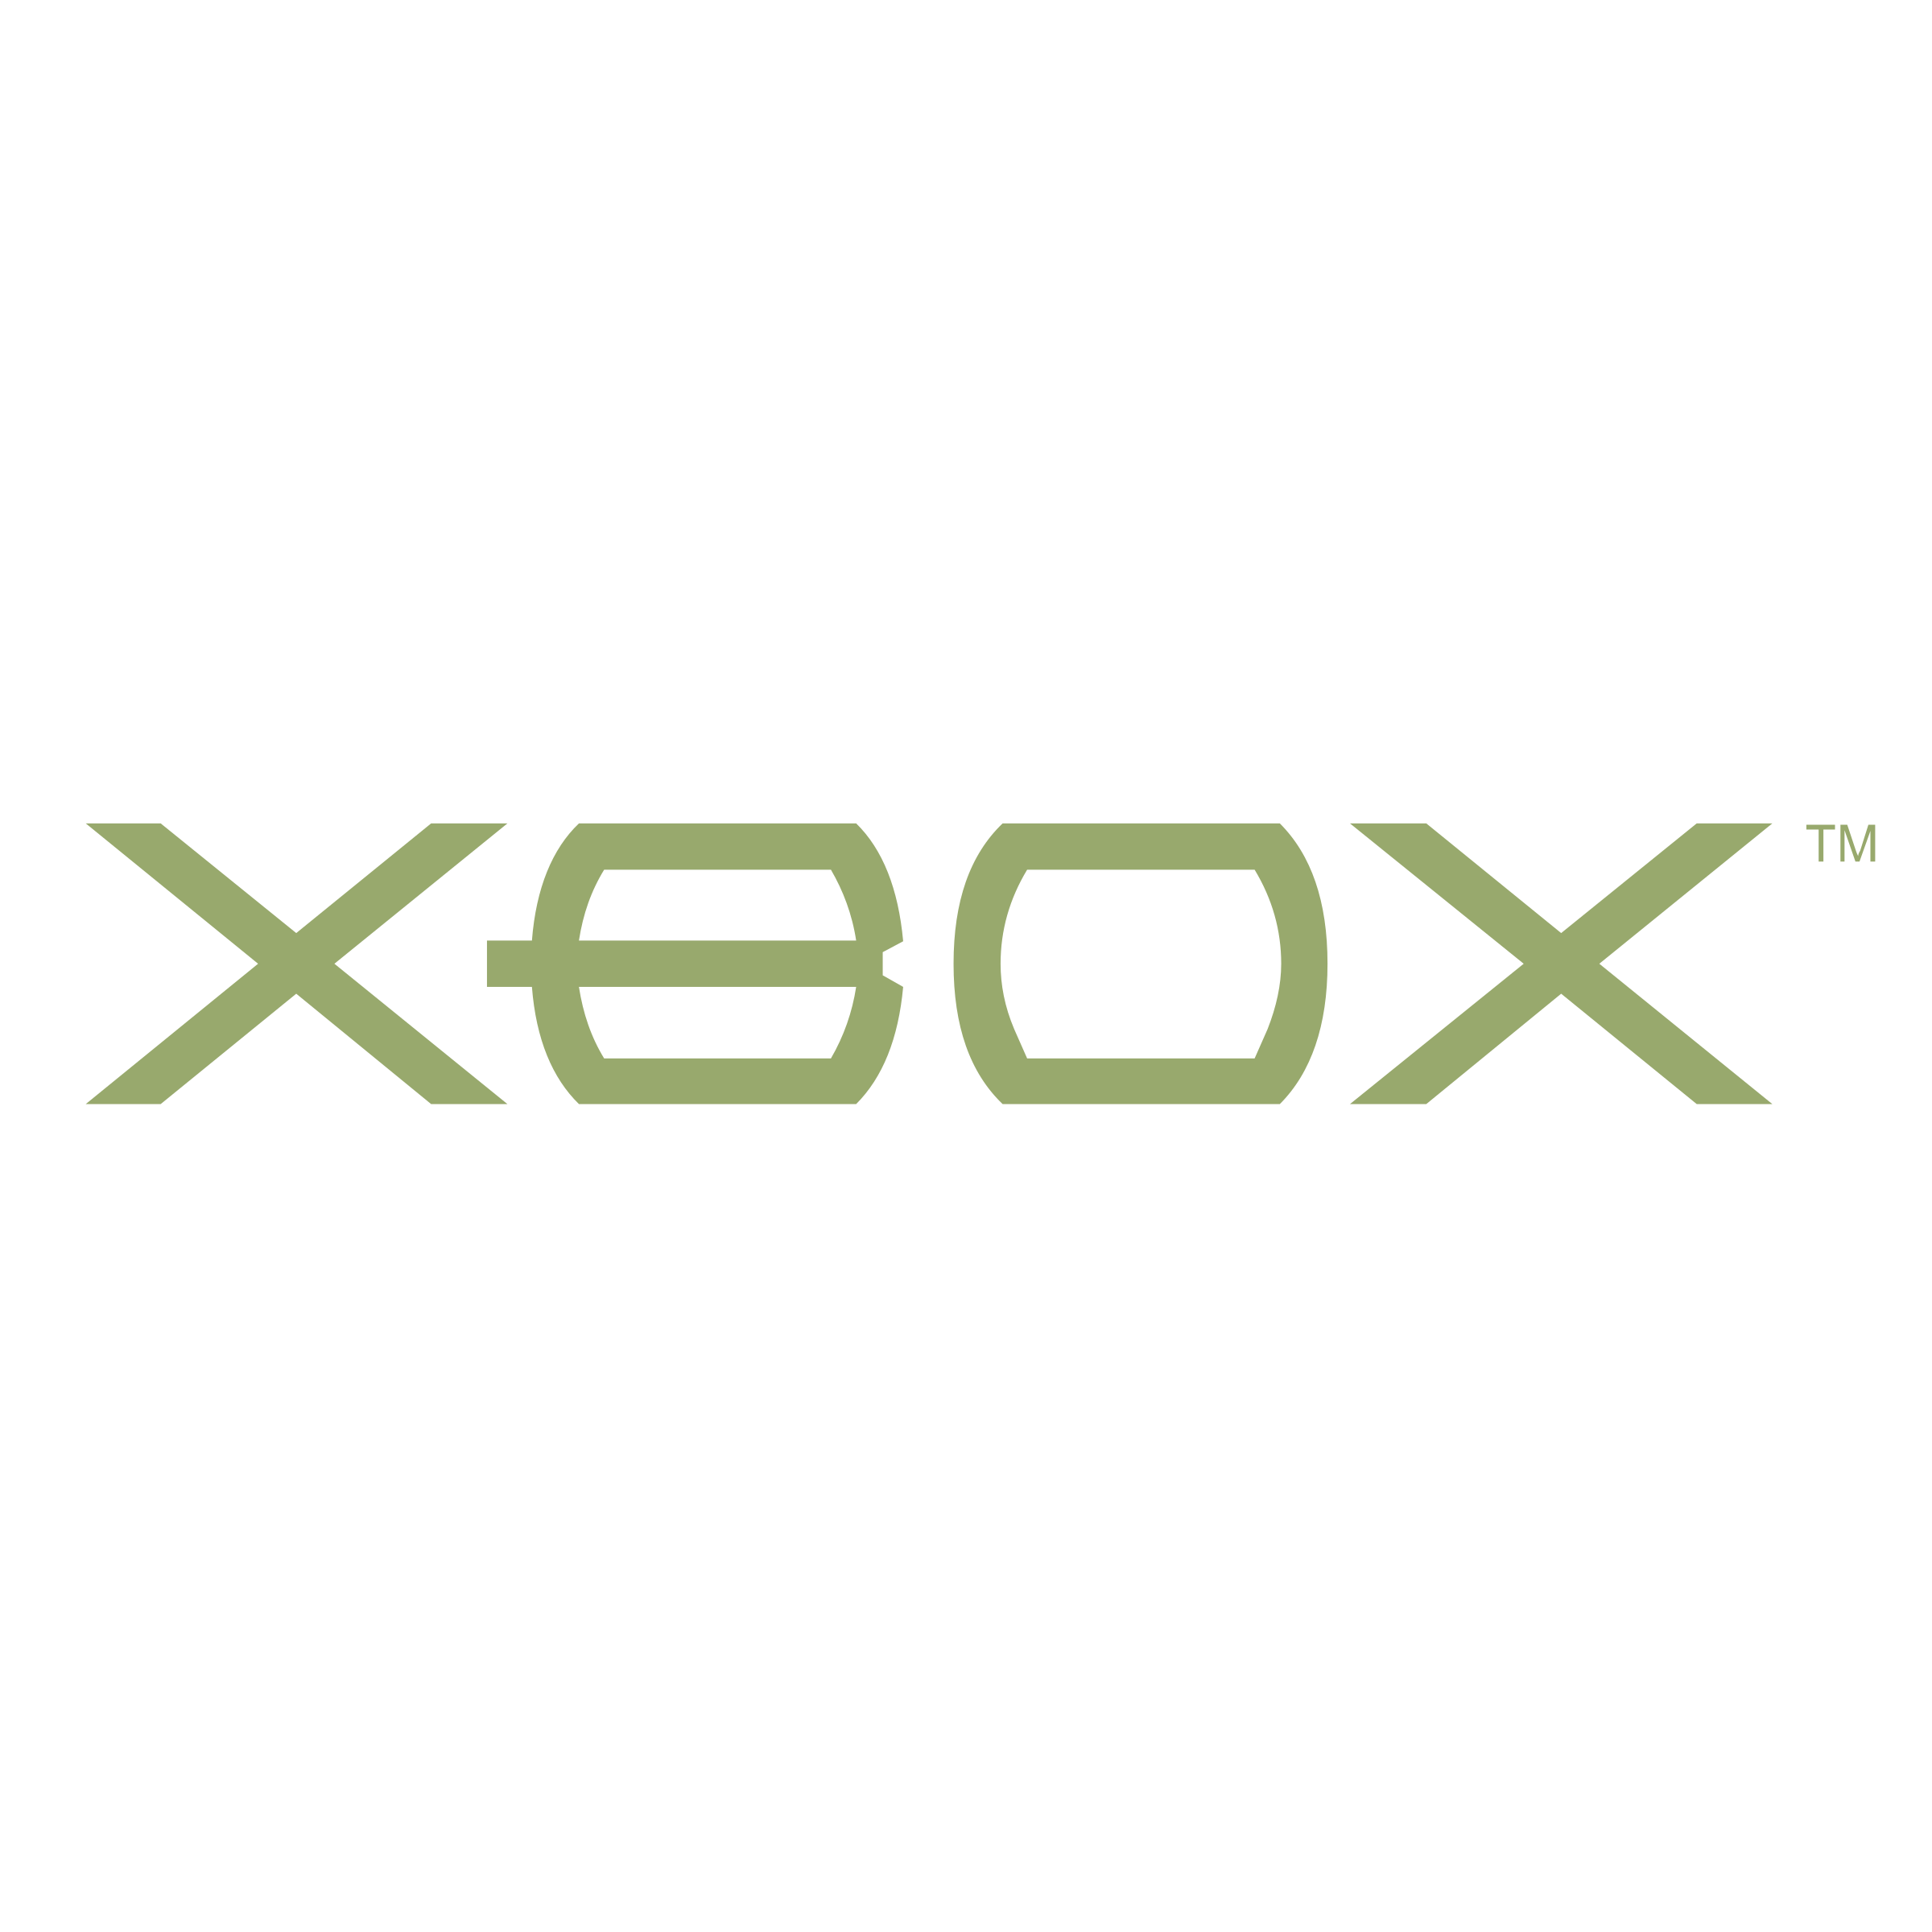 Microsoft Xbox Logo - Microsoft XBOX Logo PNG Transparent & SVG Vector - Freebie Supply